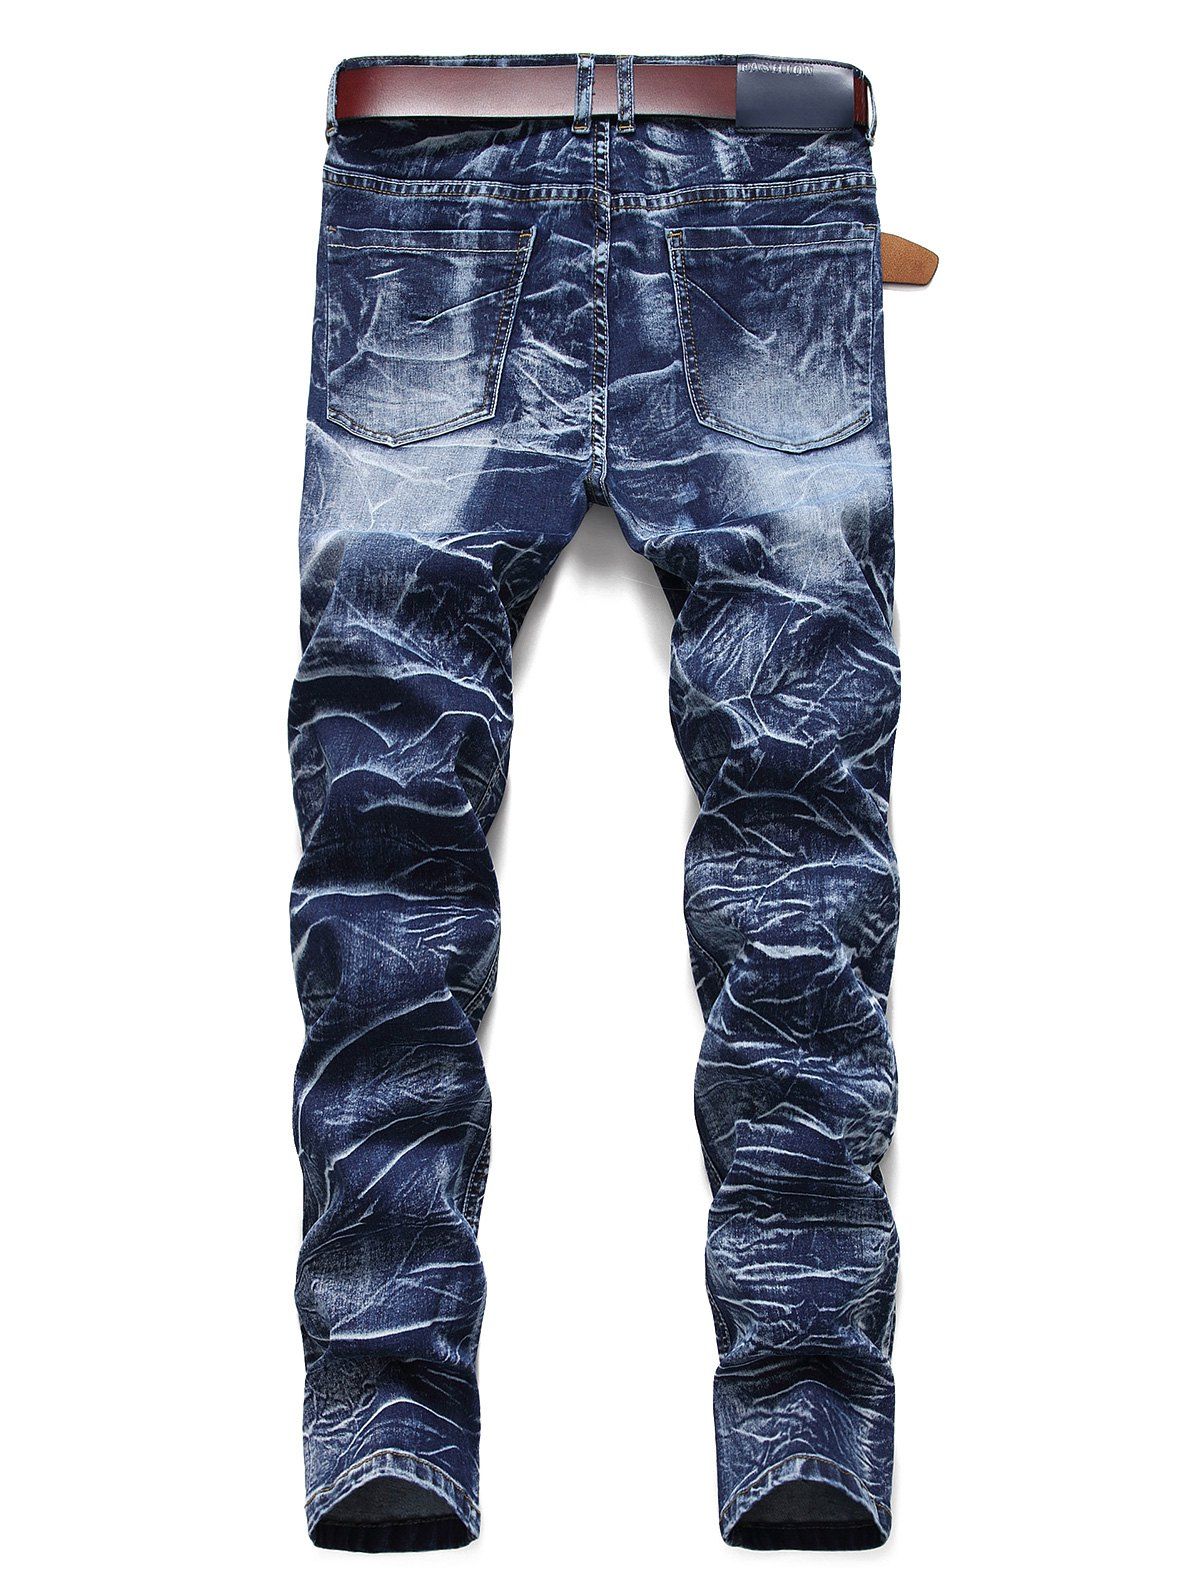 [21% OFF] 2020 Leisure Printed Zipper Fly Jeans In DENIM DARK BLUE ...